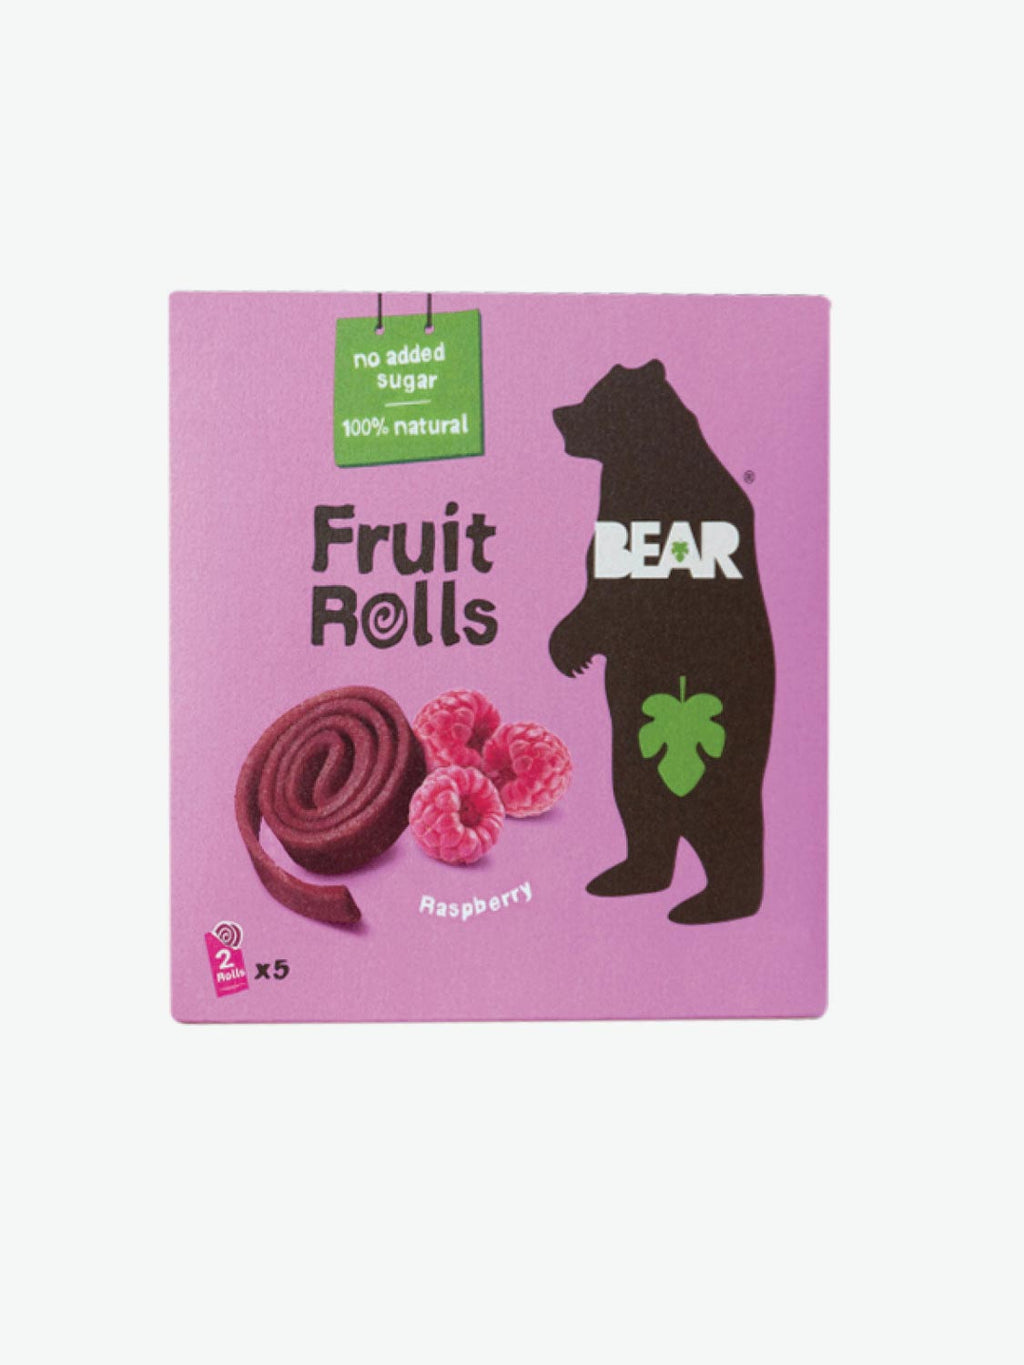 Bear Fruit Rolls Raspberry | A